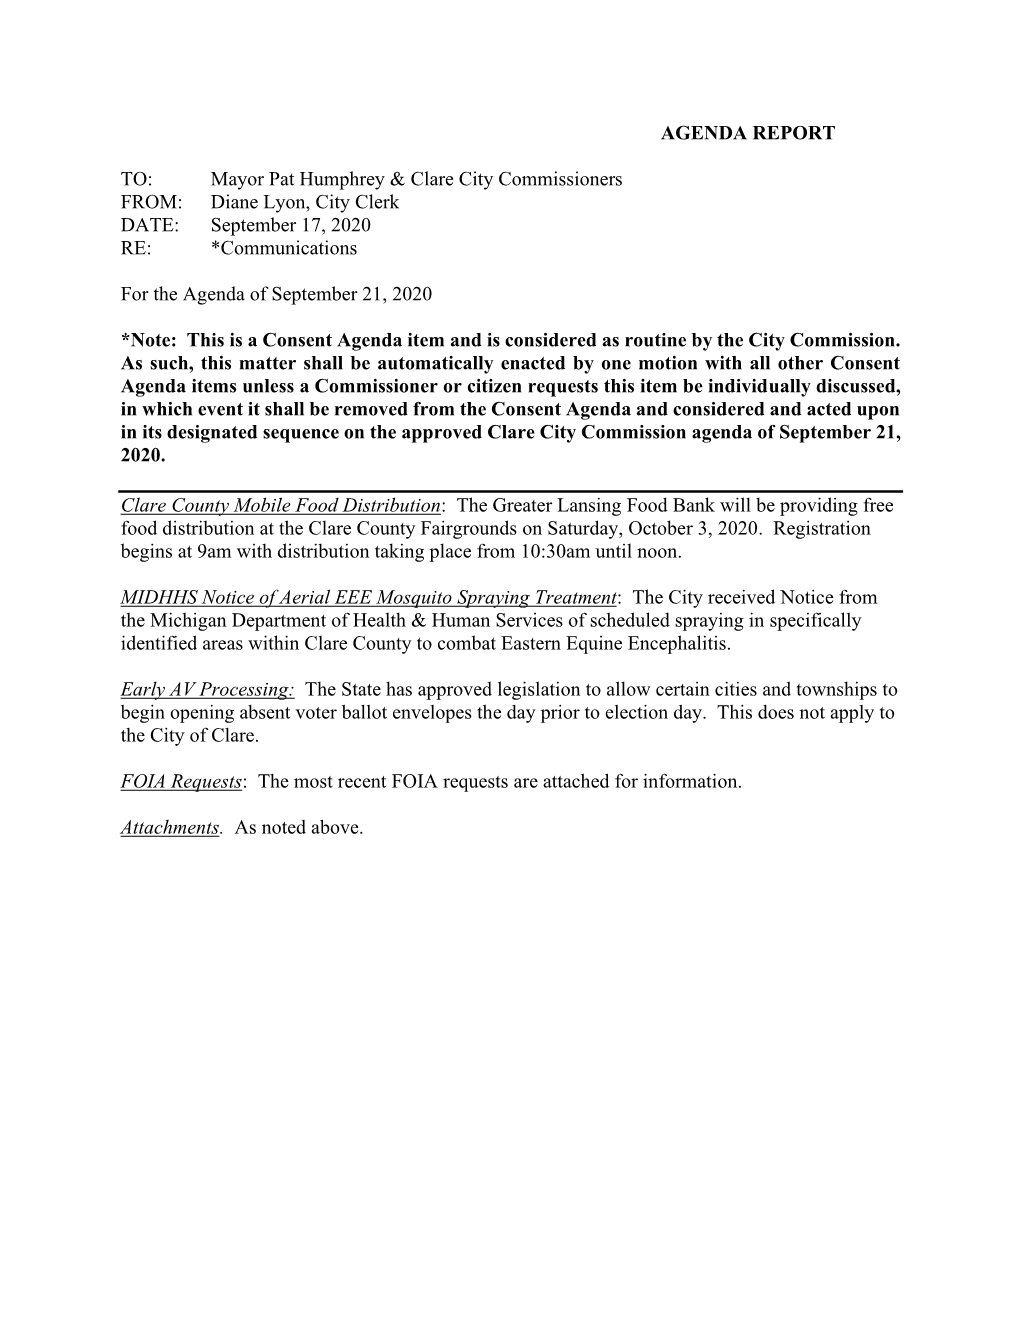 AGENDA REPORT TO: Mayor Pat Humphrey & Clare City